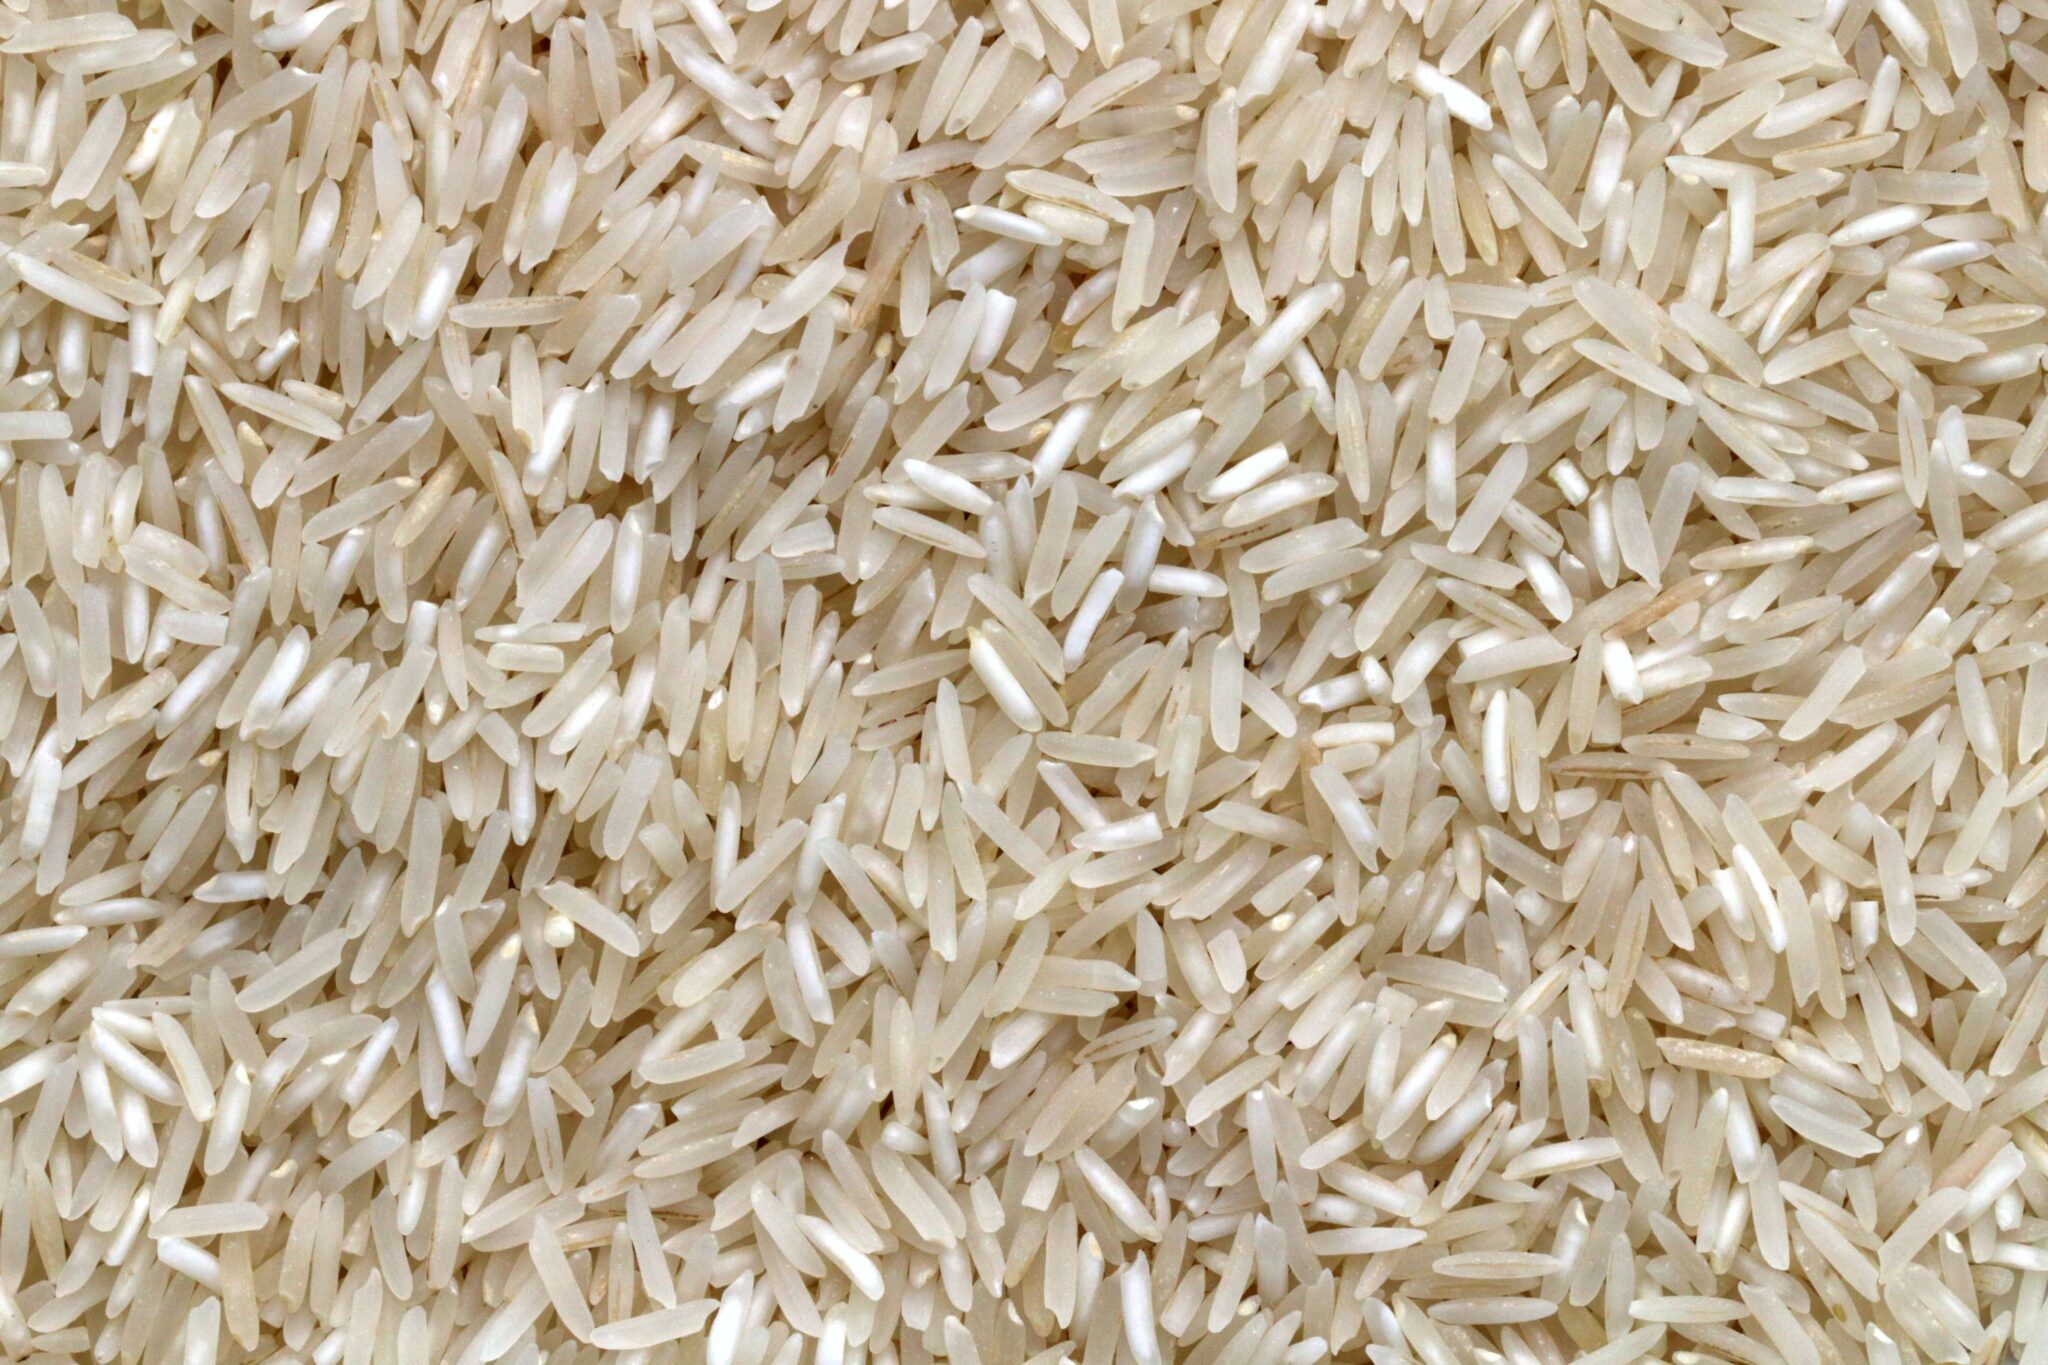 A close up of rice